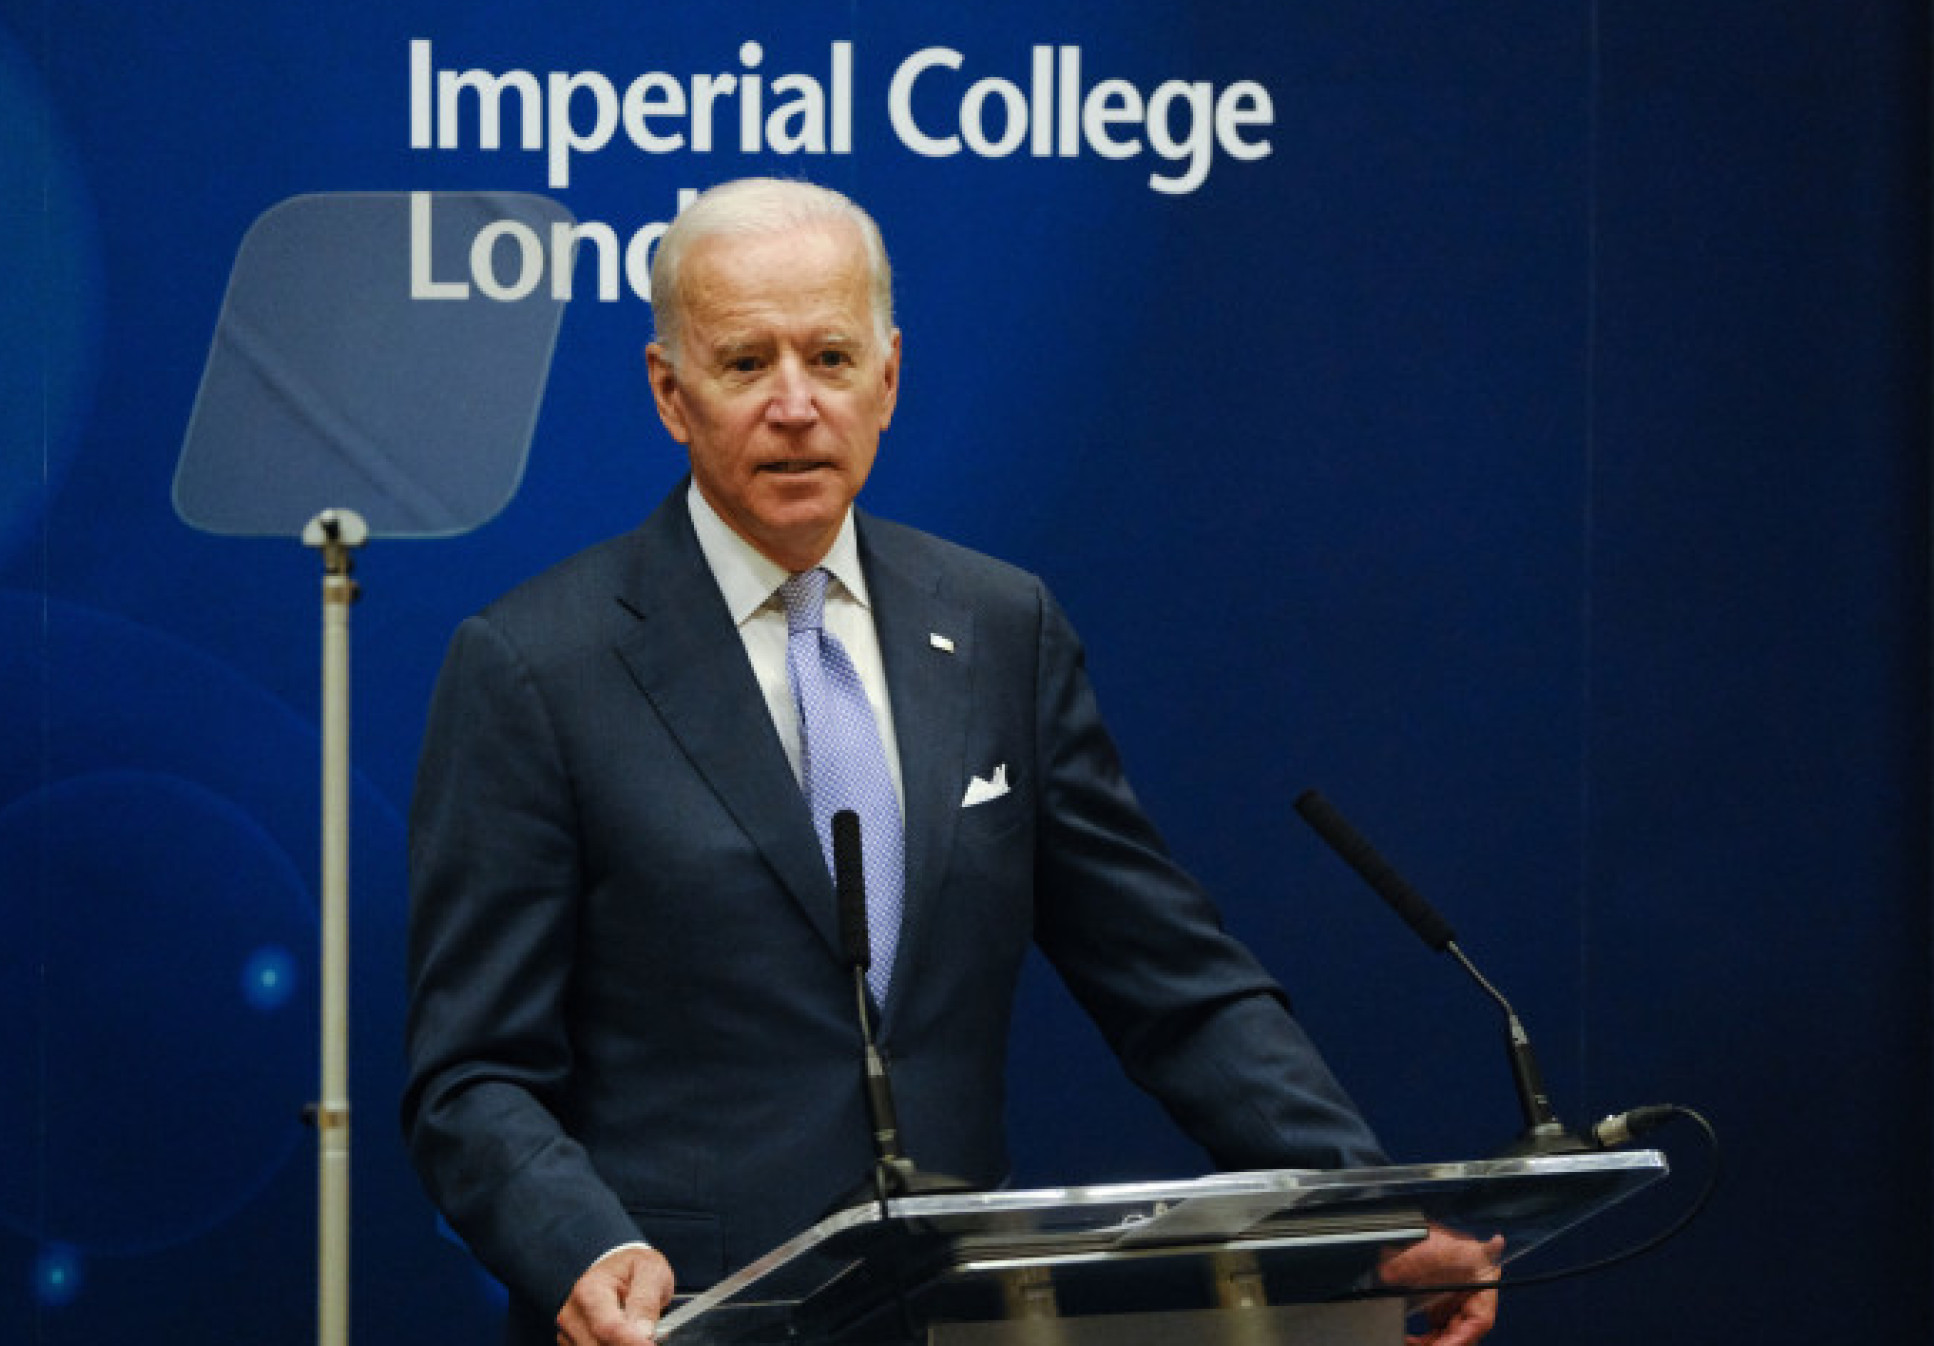 President Joe Biden speaking at Imperial College London